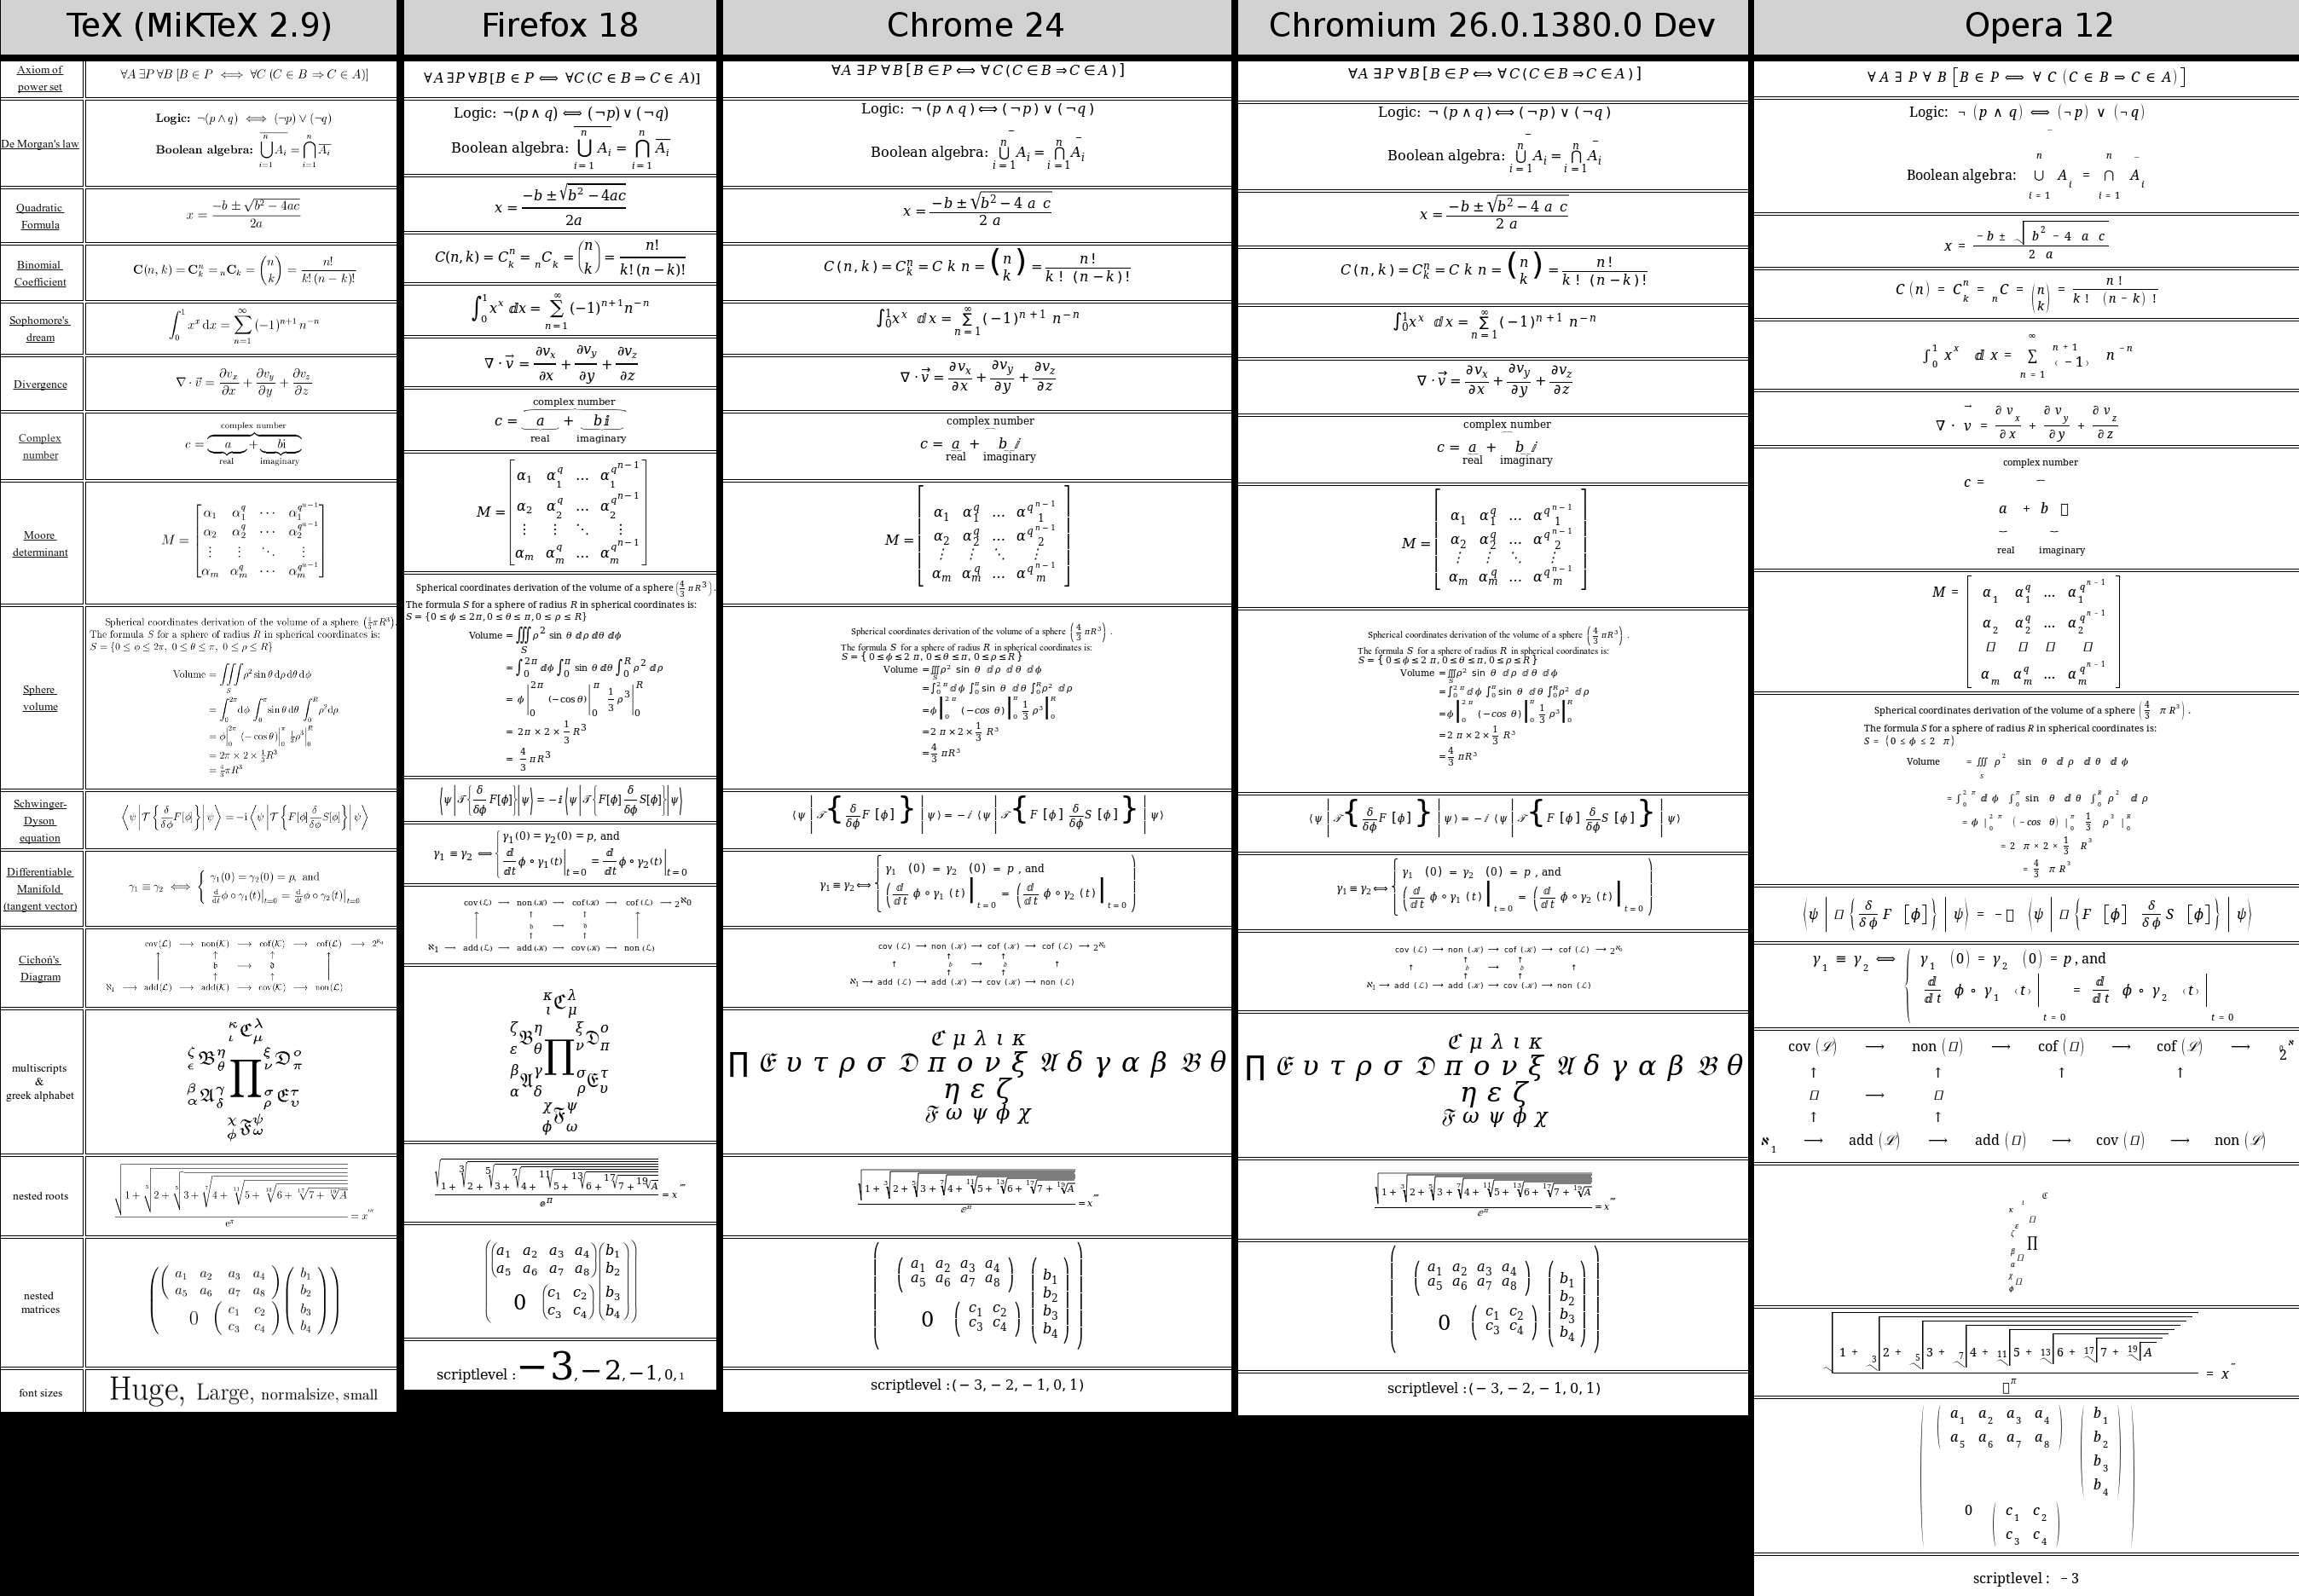 MathML results